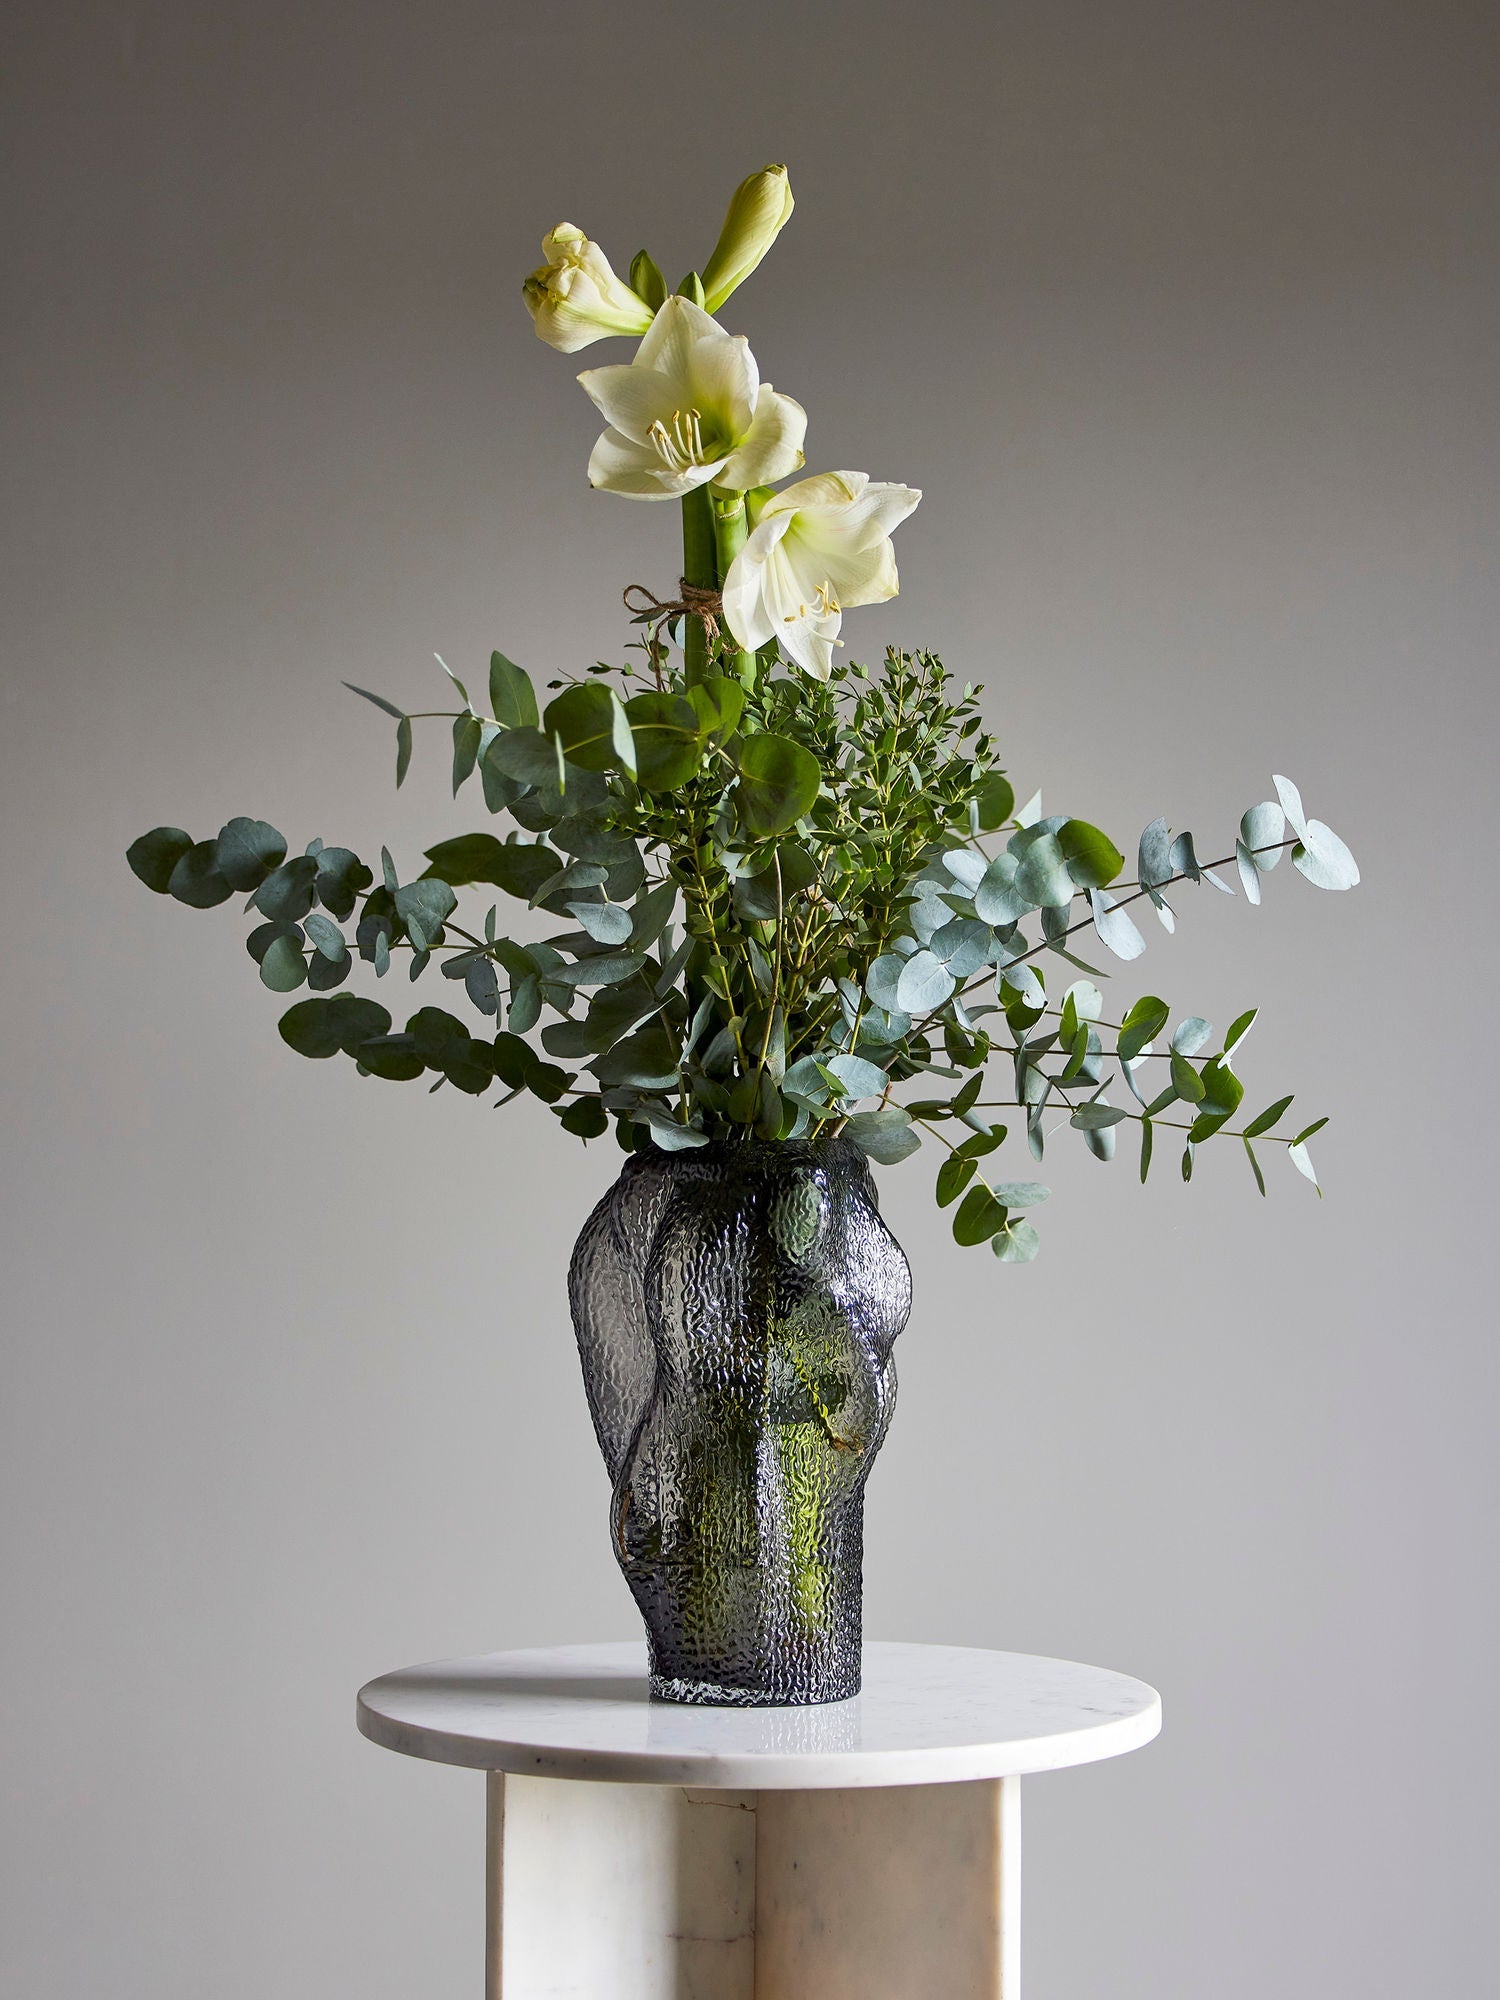 Bloomingville Khalid Vase, Grey, Glass